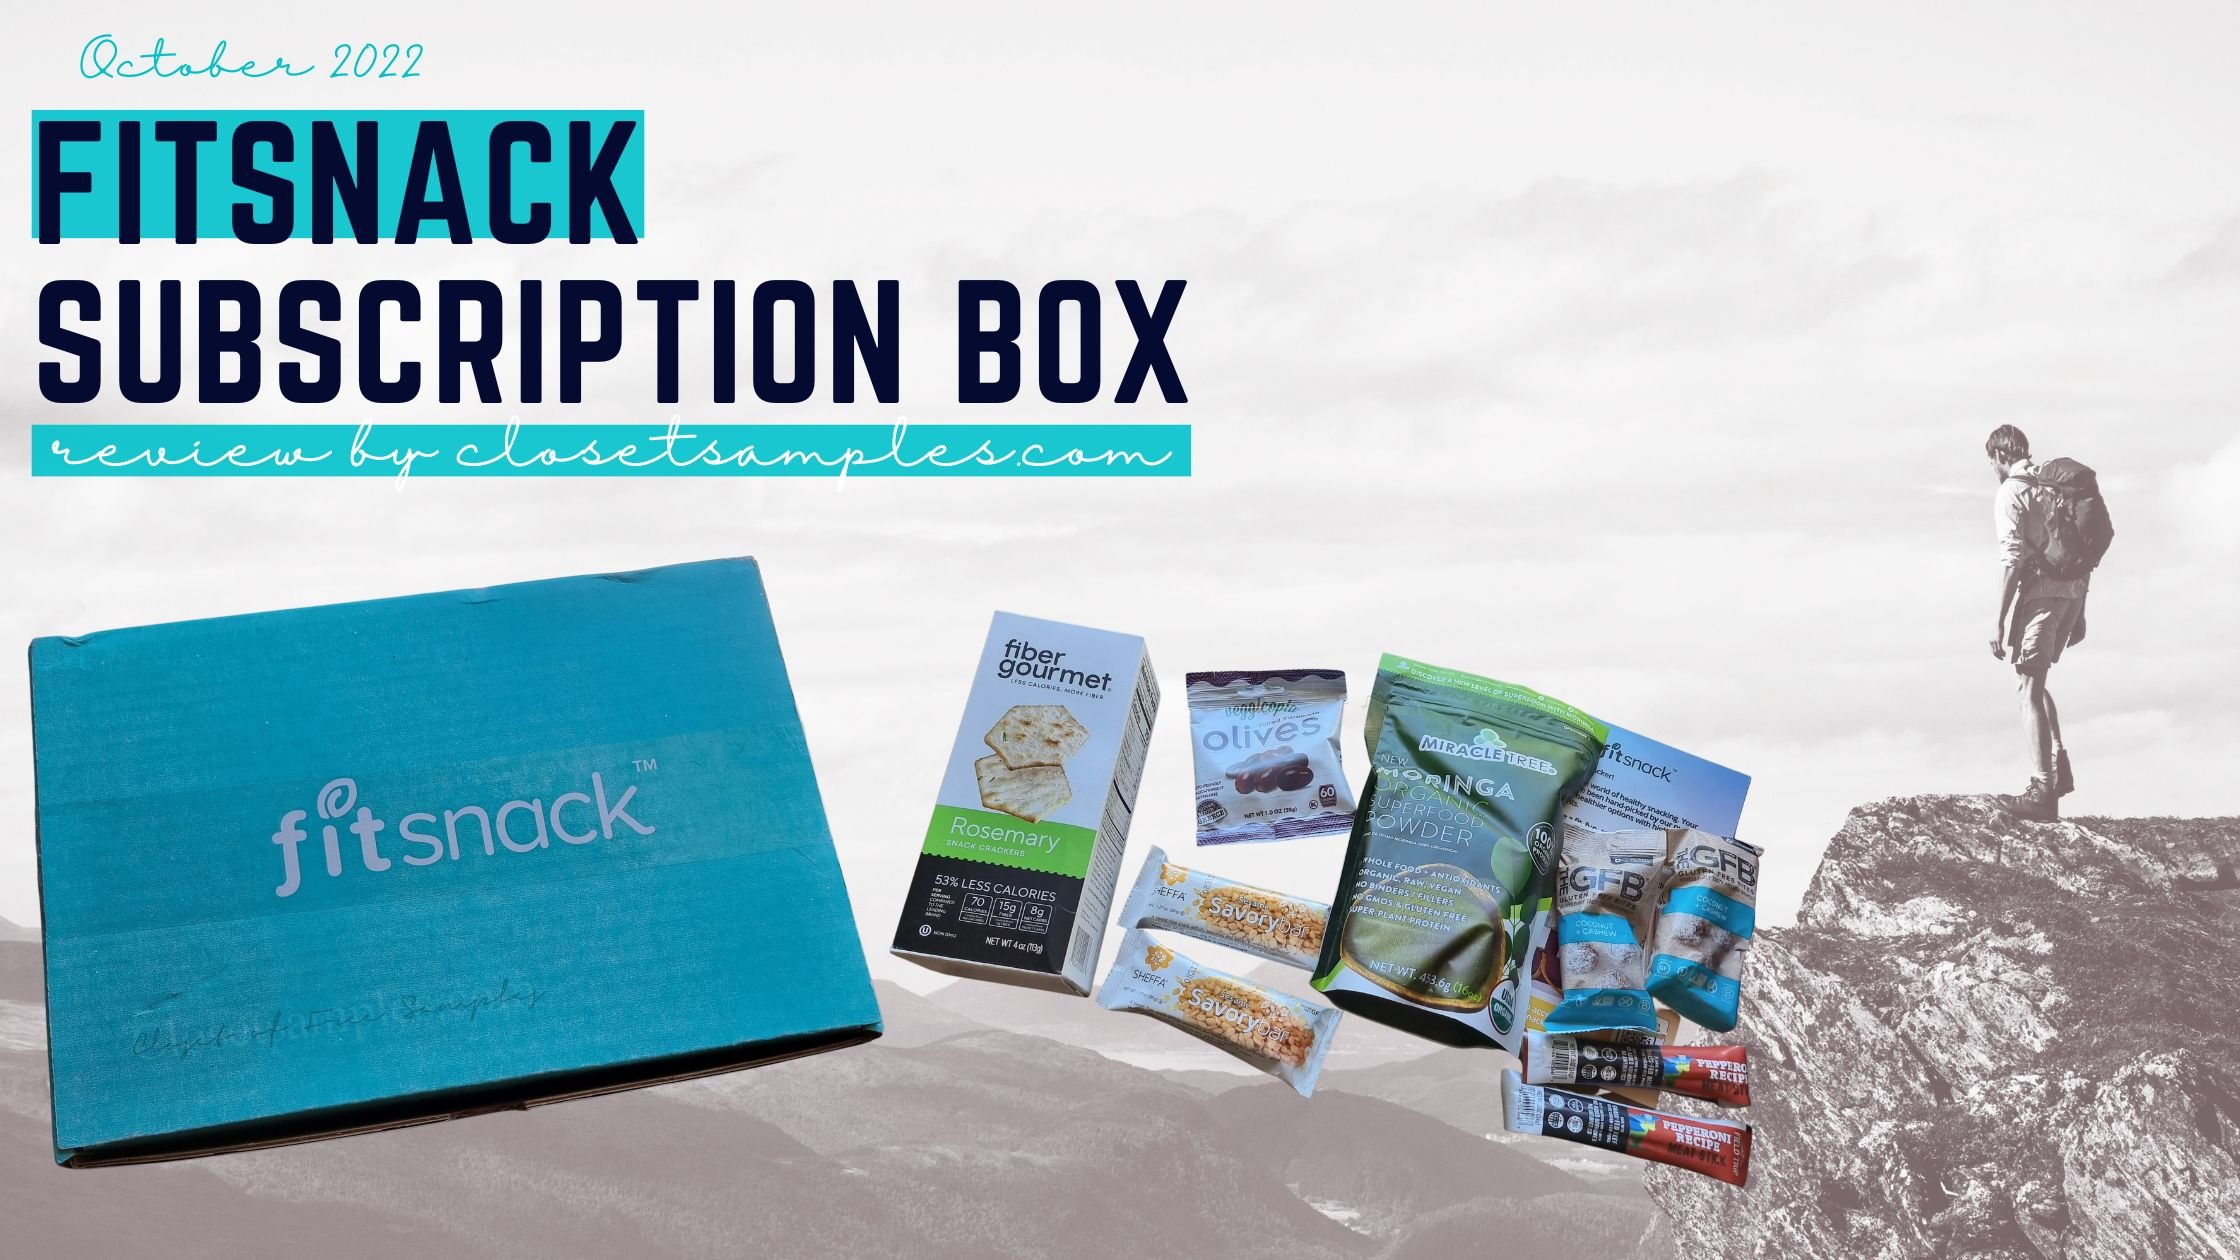 FitSnack Subscription Box october 2022 Review closetsamples